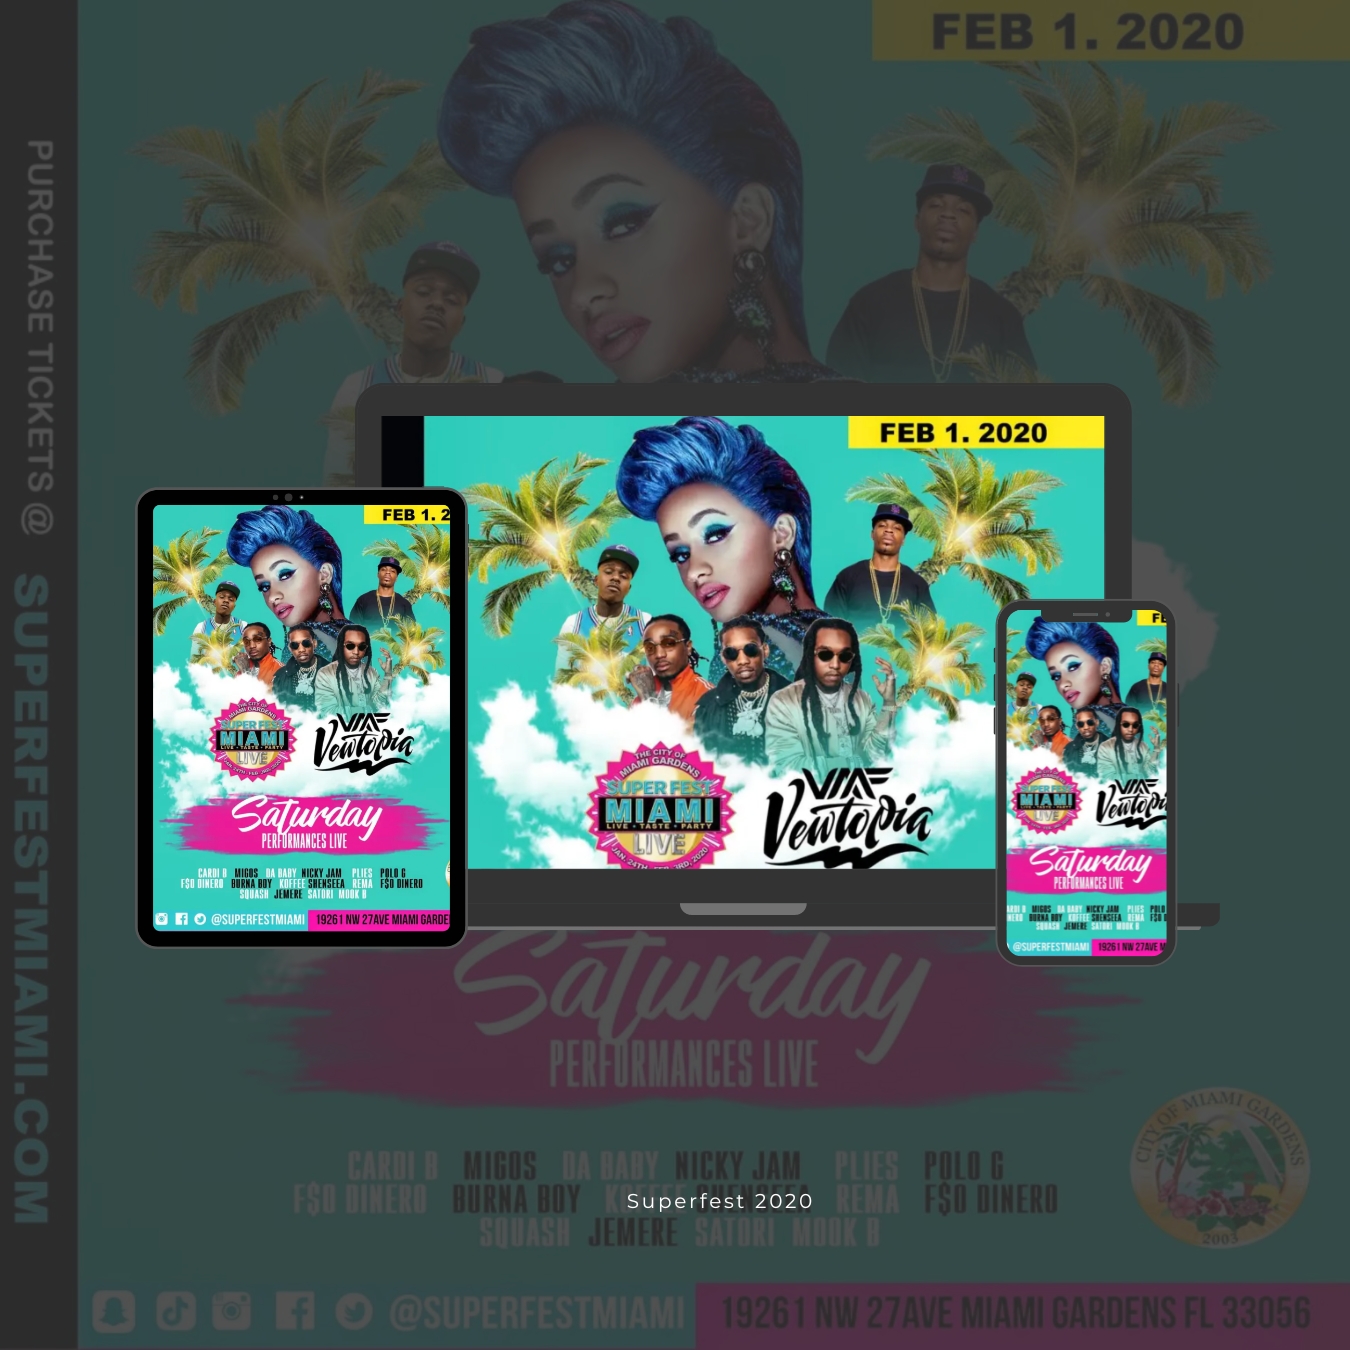 Superbowl 2020 Superfest in Miami Cardi B flyer